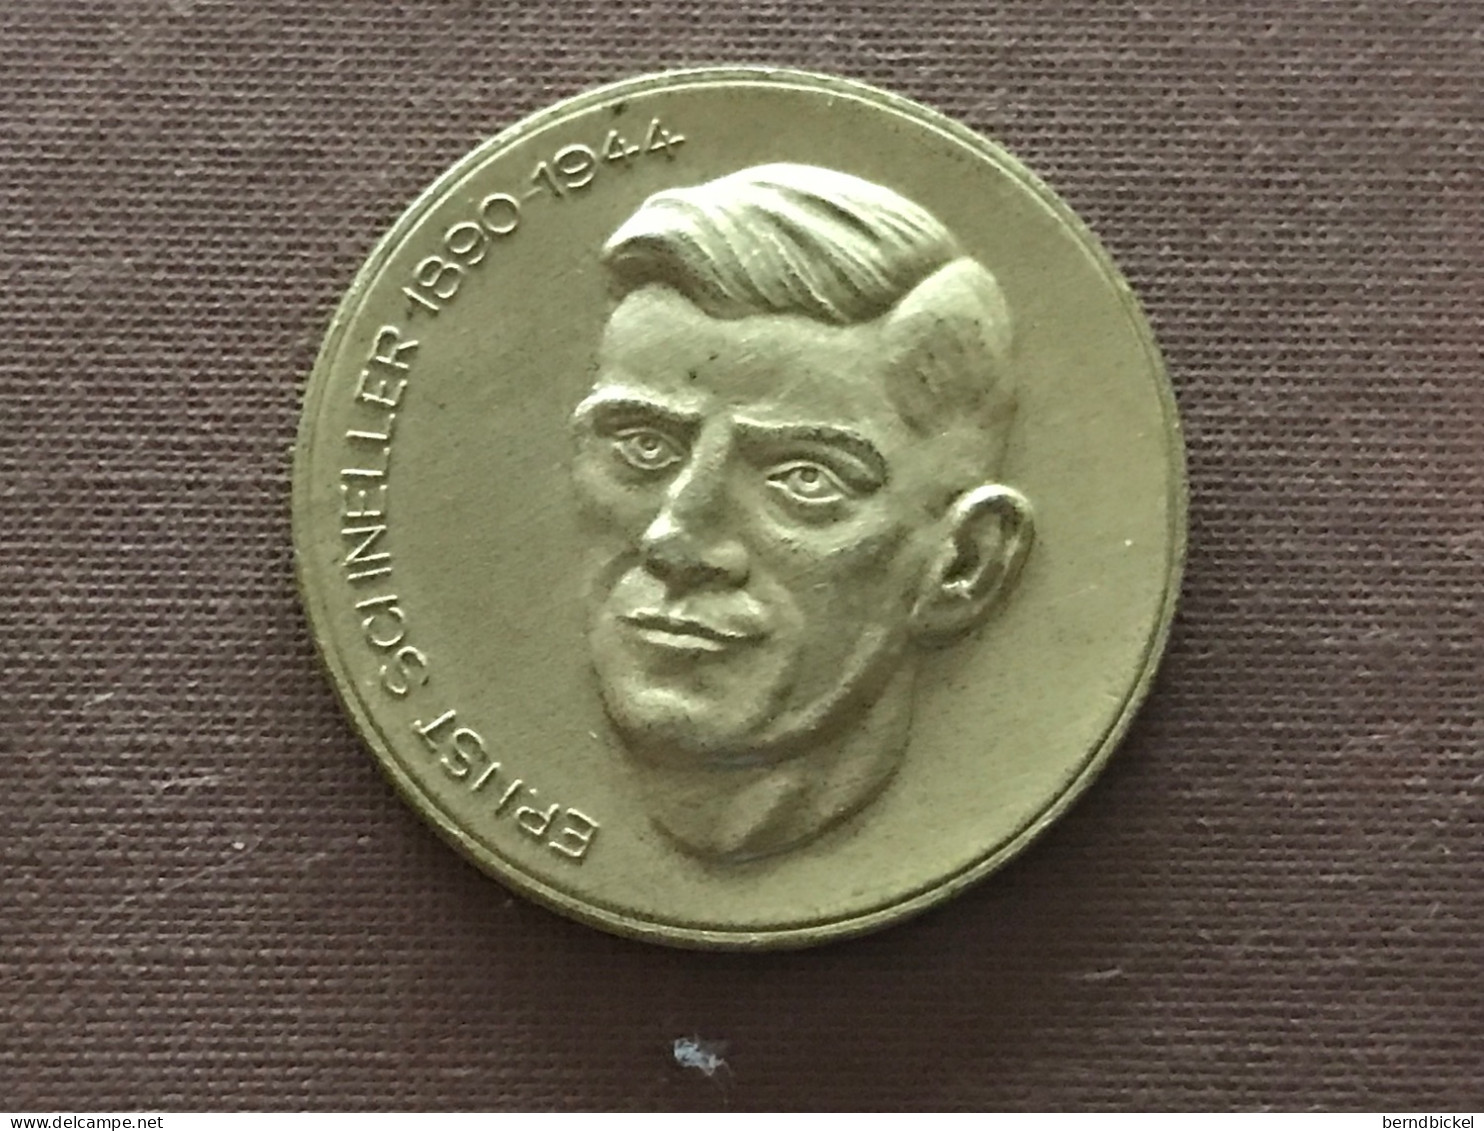 Münze Münzen Medaille DDR Bernd Schneller Revolutionärer Führer - Adel